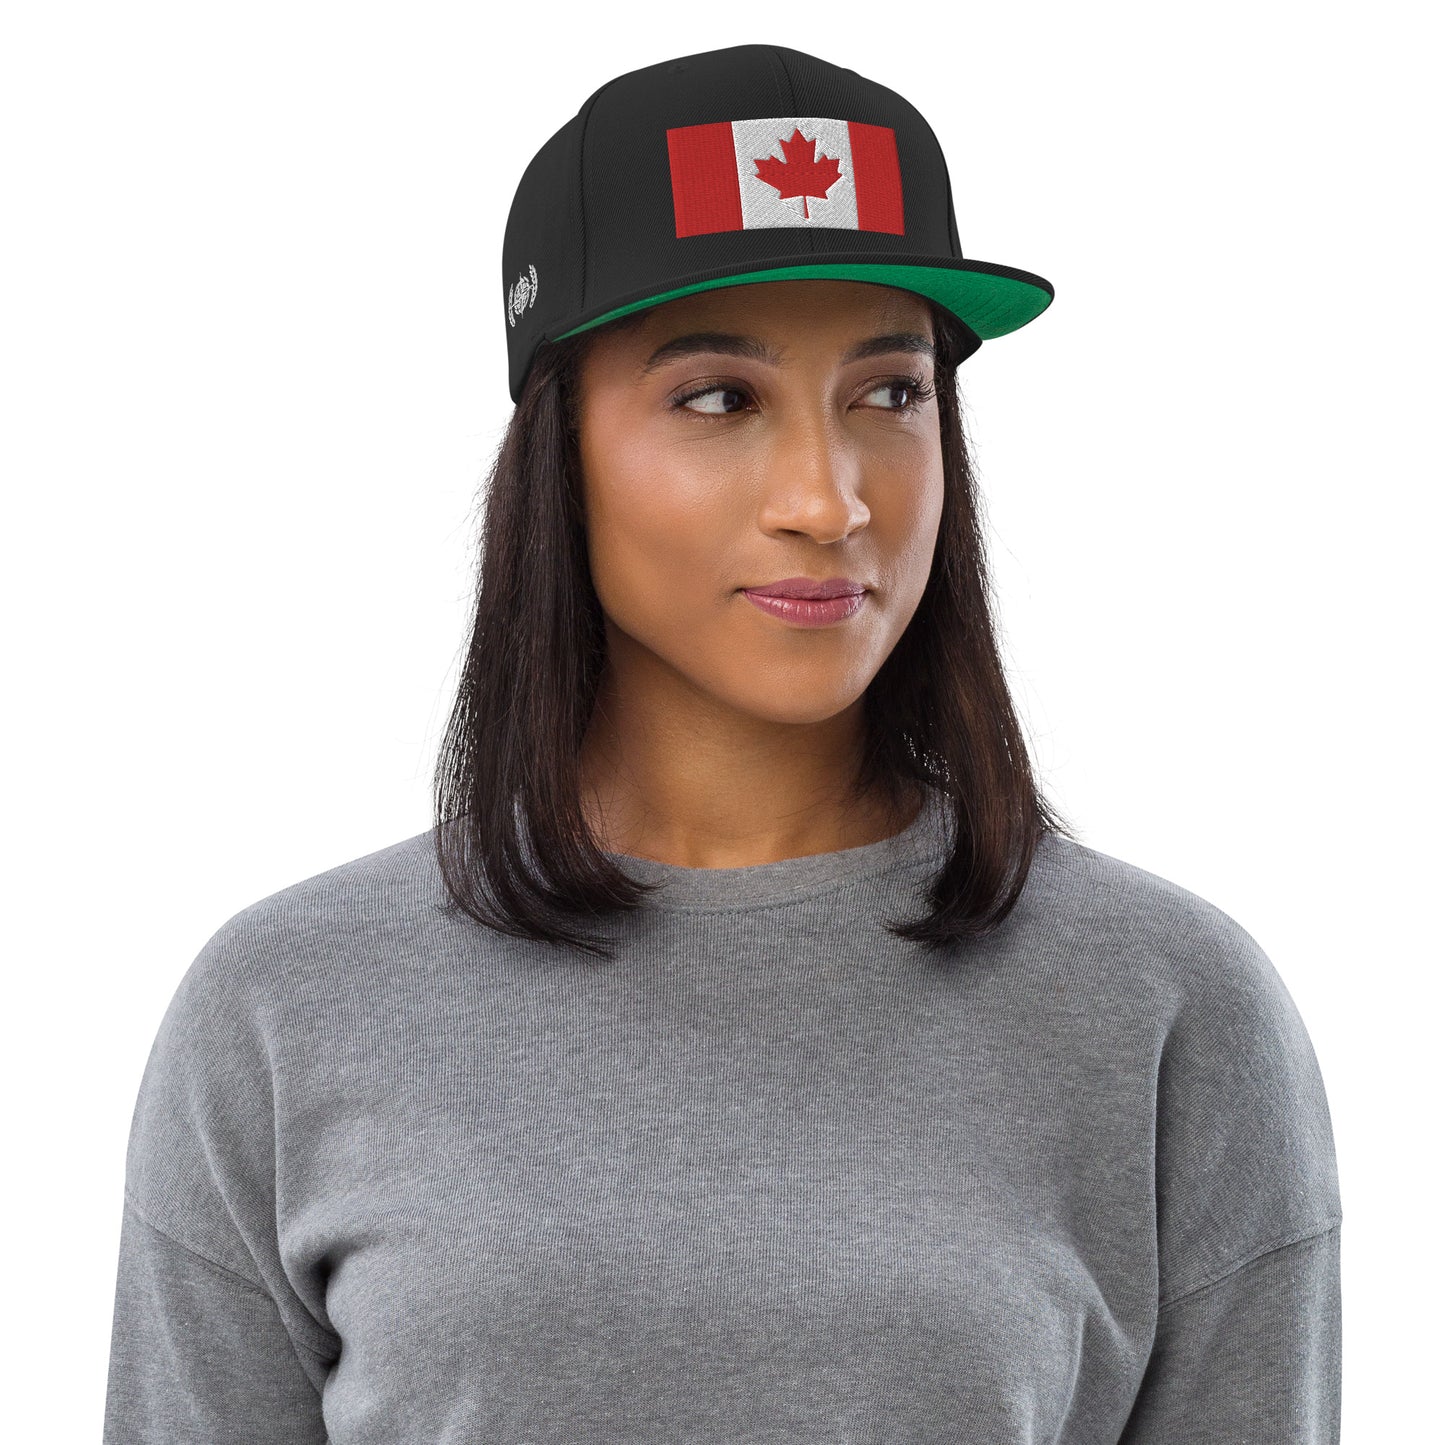 Heritage & Honor Snapback Cap 'Canada' 2